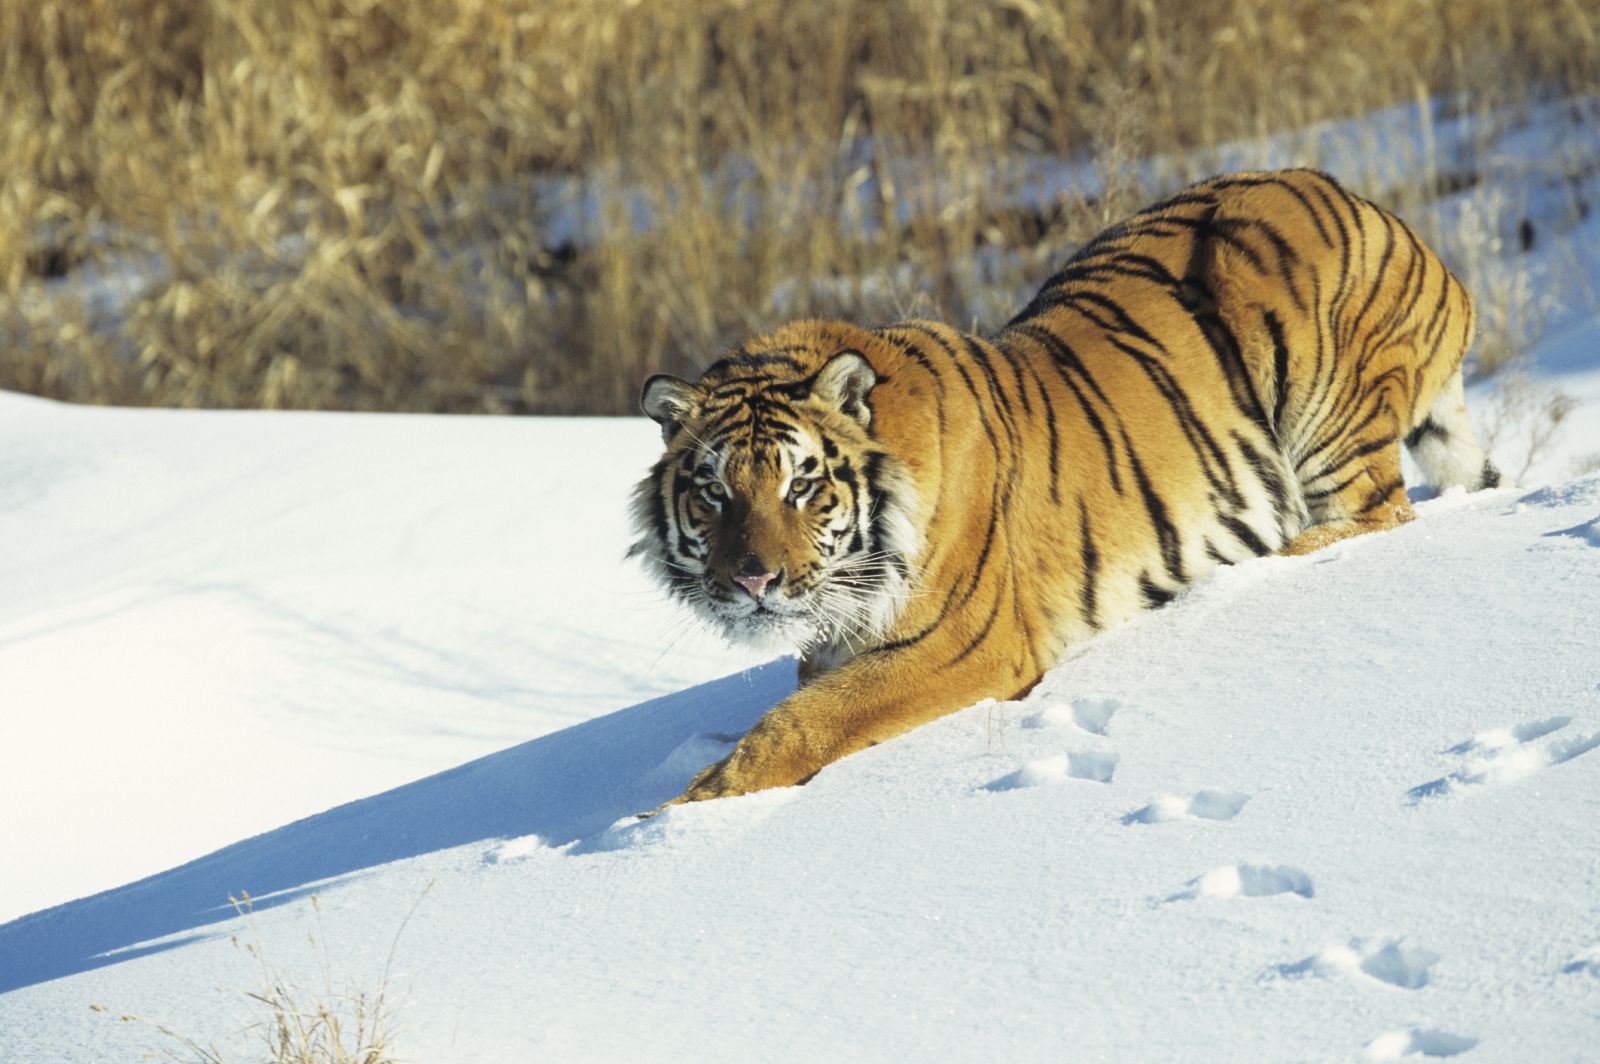 Un ejemplar adulto de tigre siberiano camina sobre la nieve